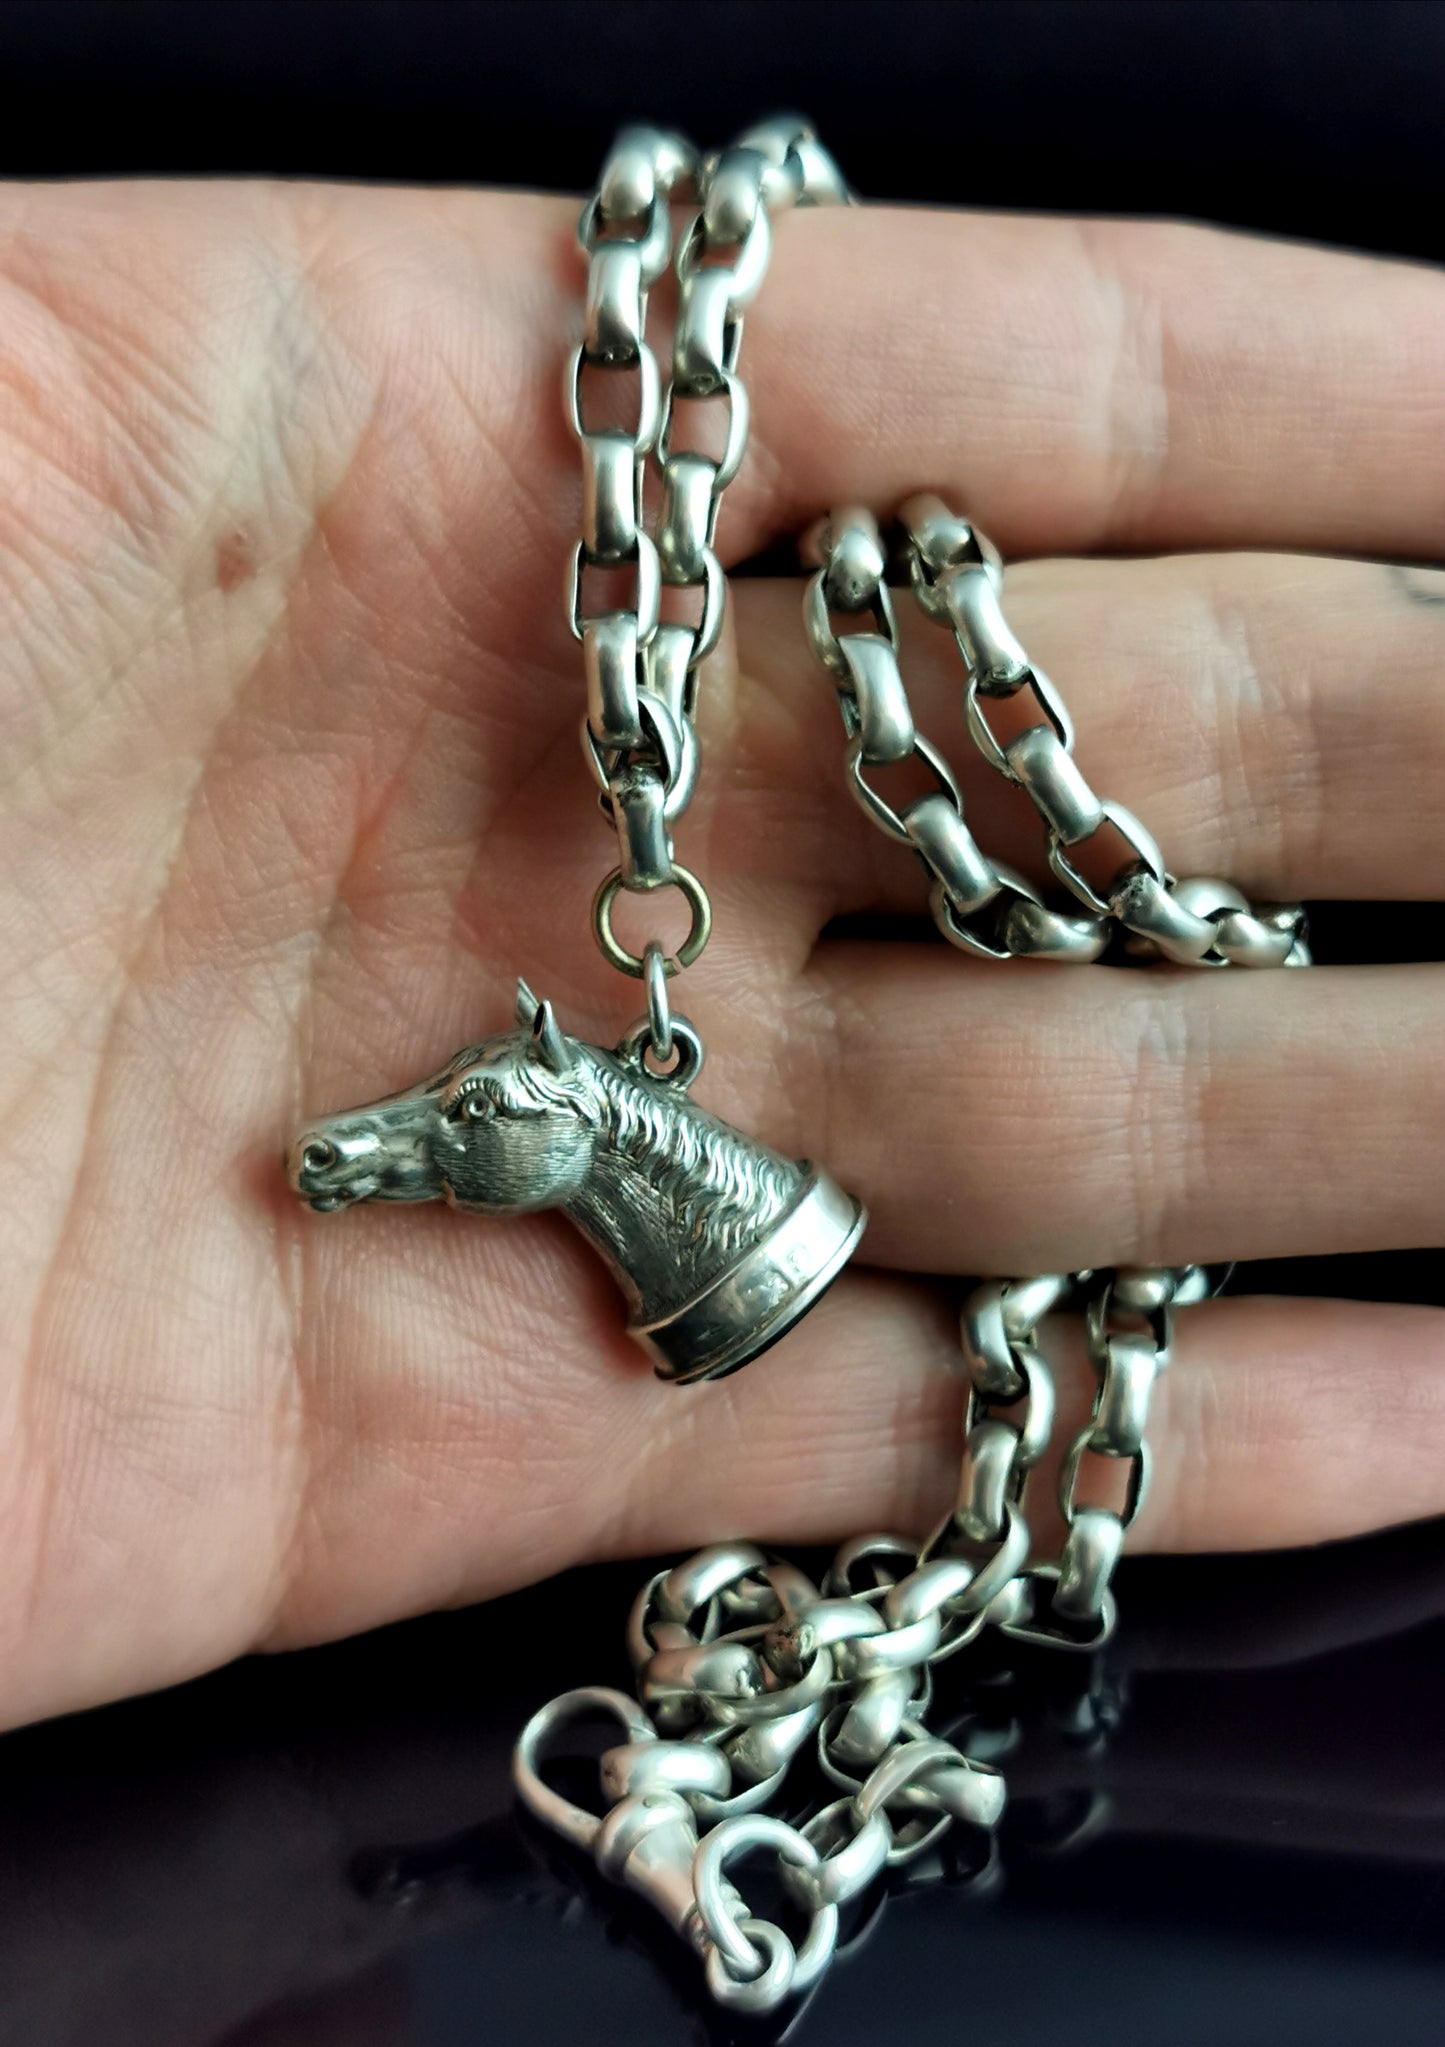 Antique silver horse seal fob pendant, Belcher link long chain necklace, Bloodstone